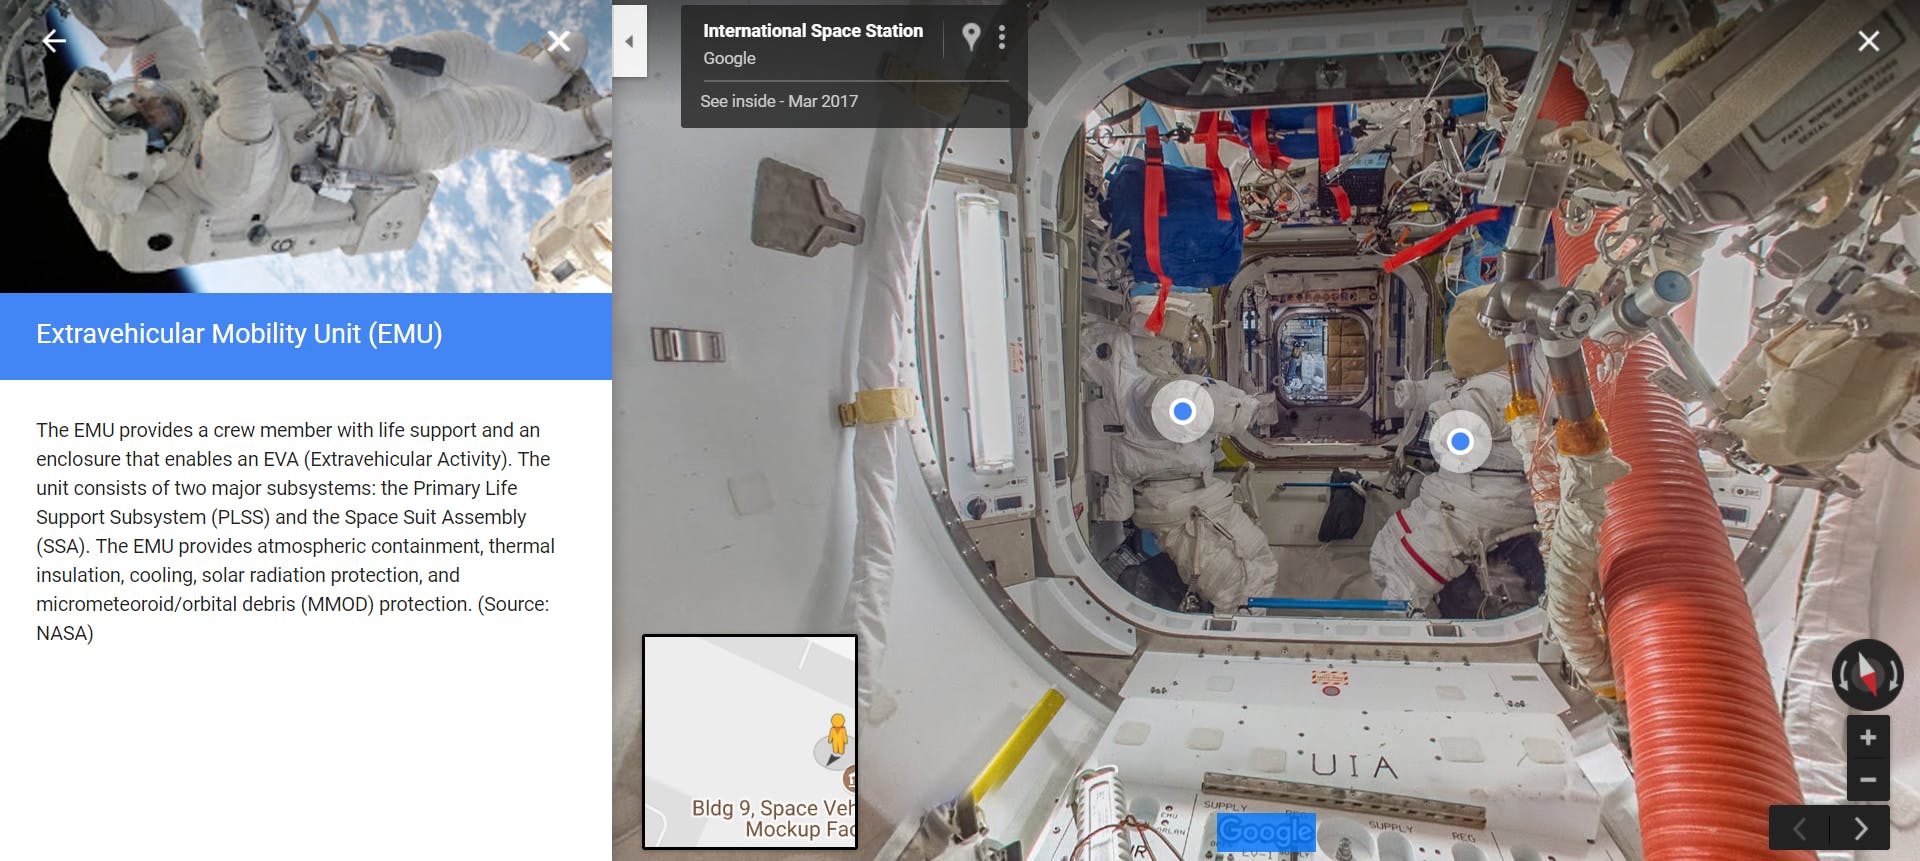 international space station google street view maps